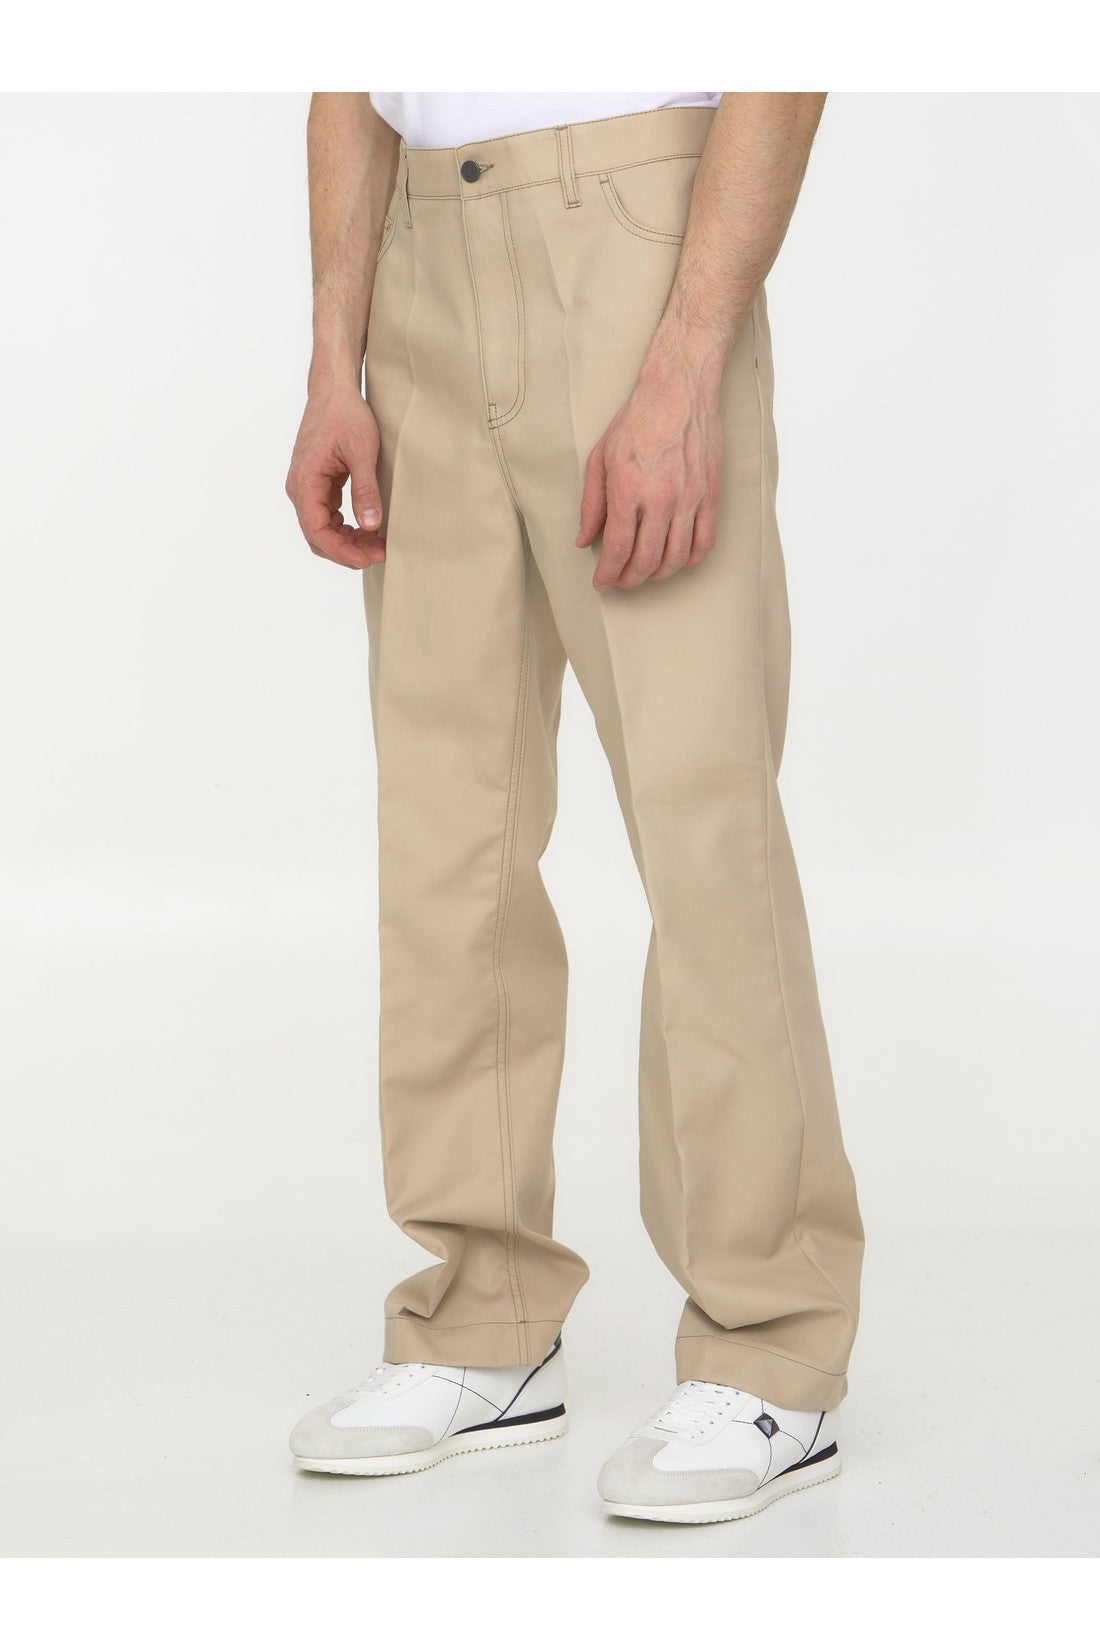 Cotton gabardine trousers